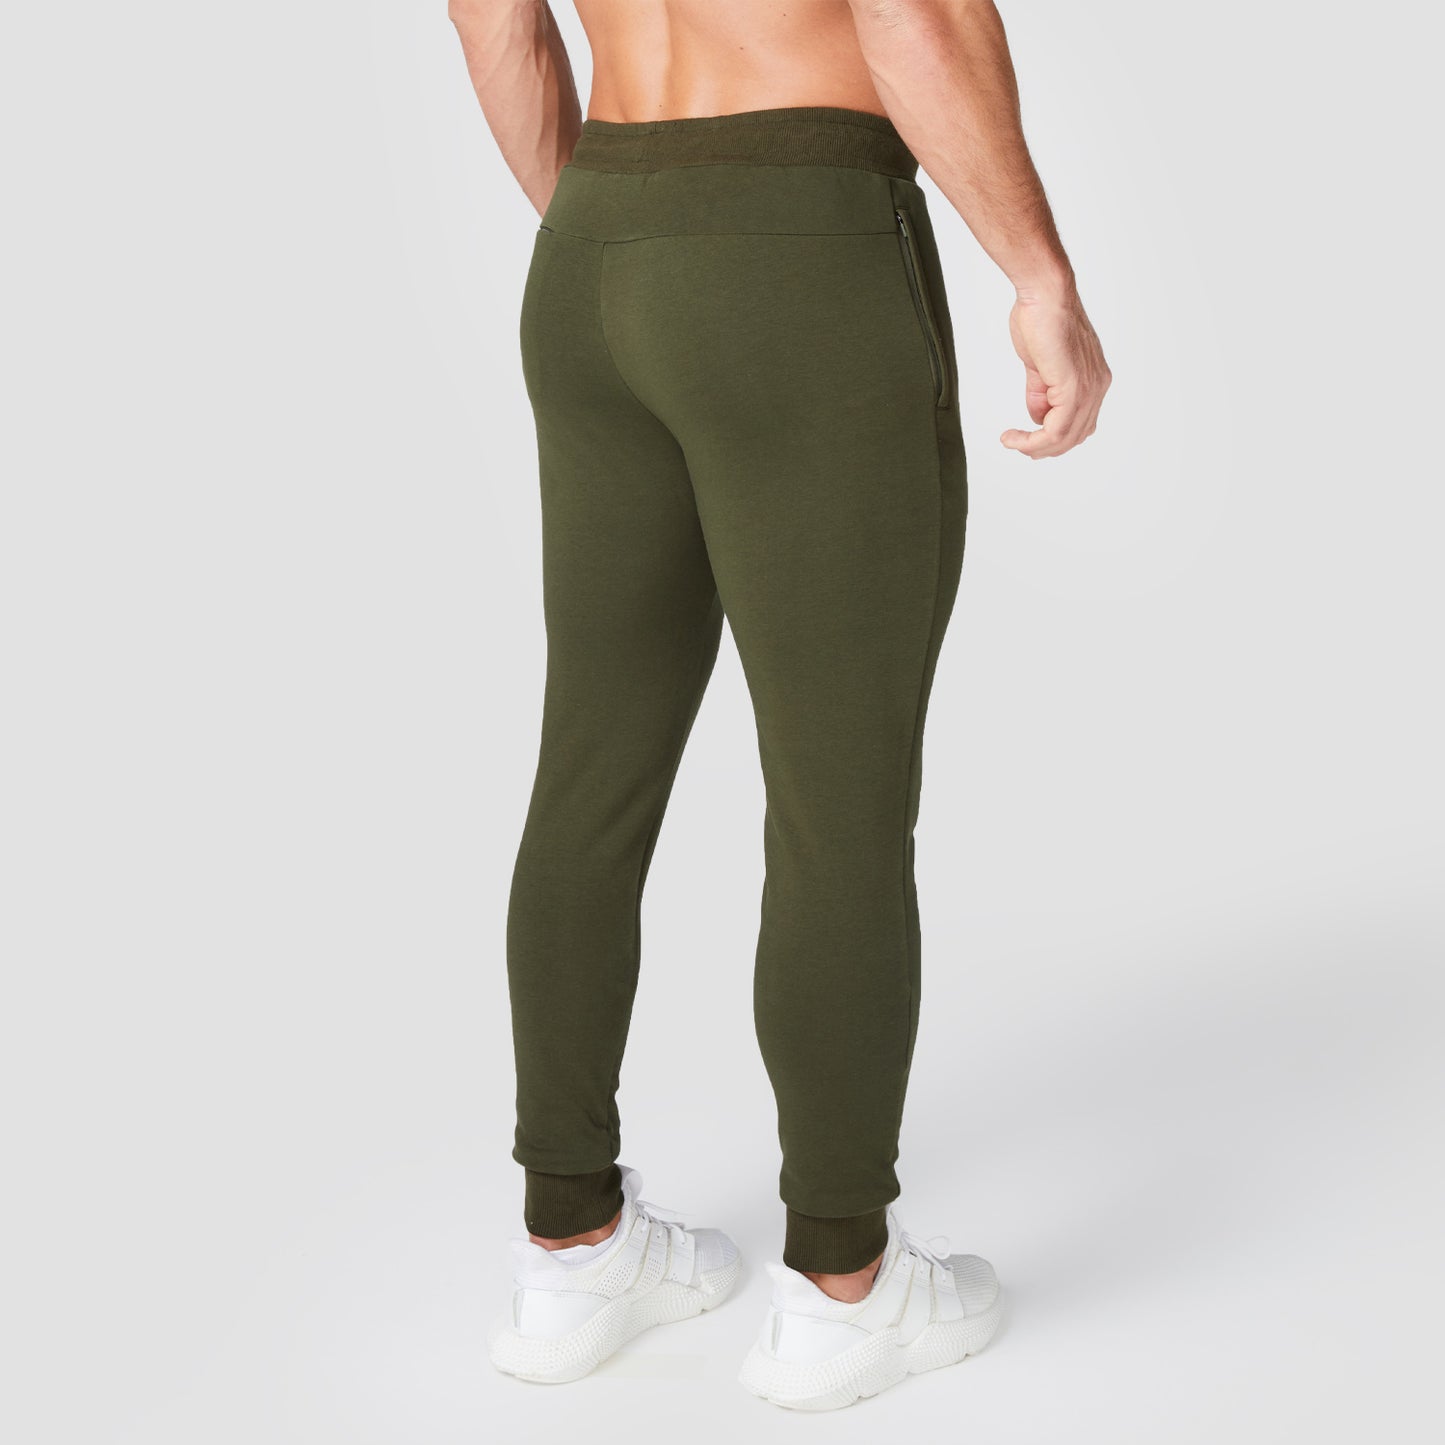 squatwolf-gym-wear-core-cuffed-joggers-khaki-marl-workout-pants-for-men